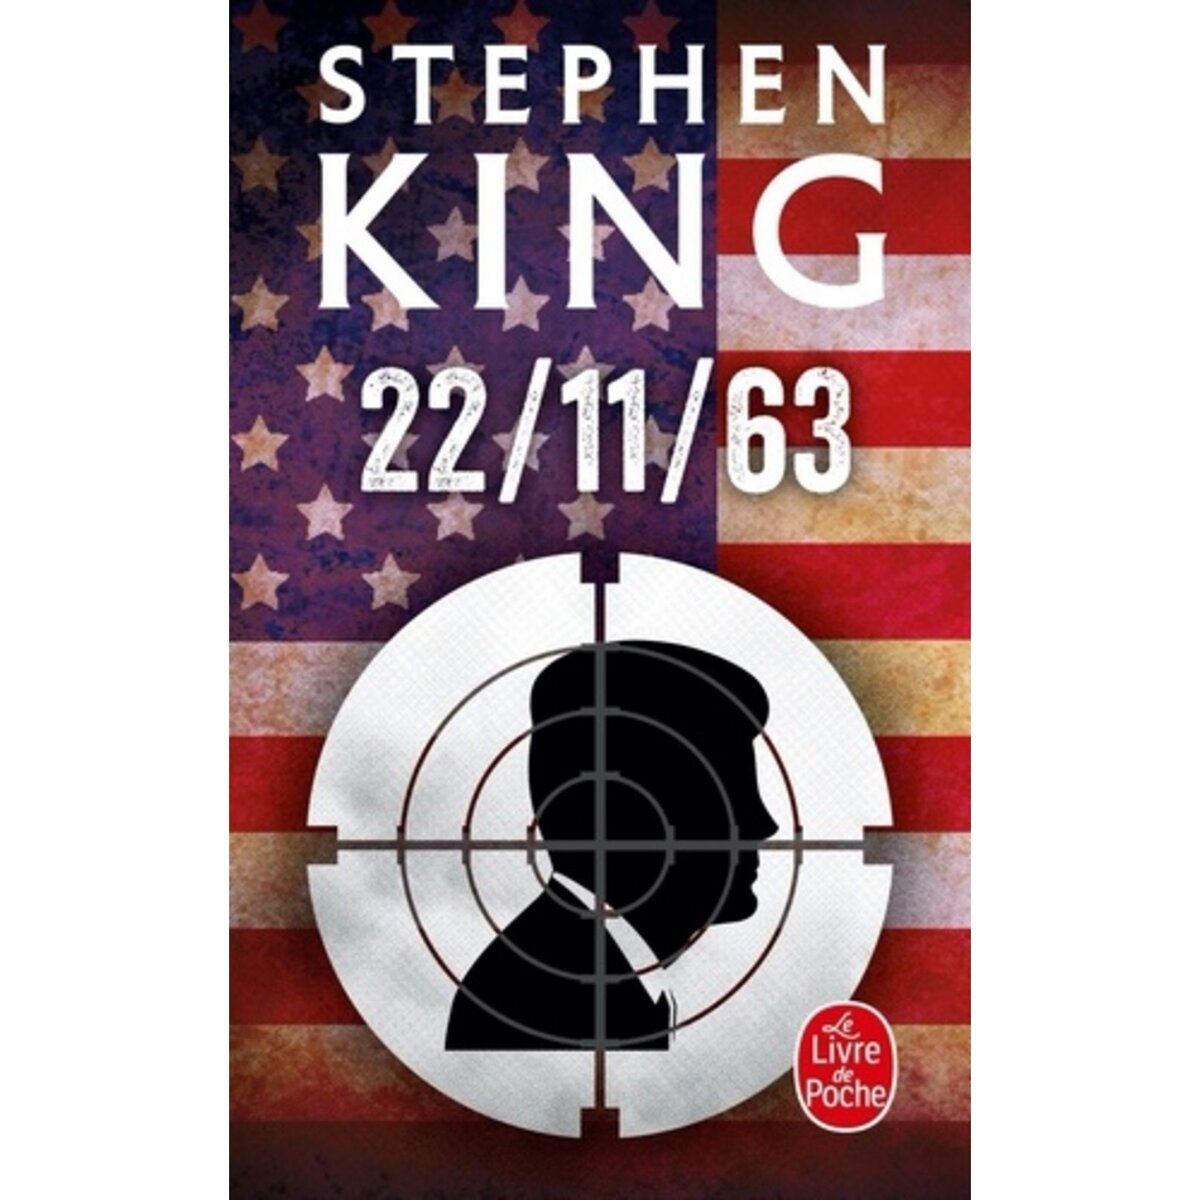  22/11/63, King Stephen